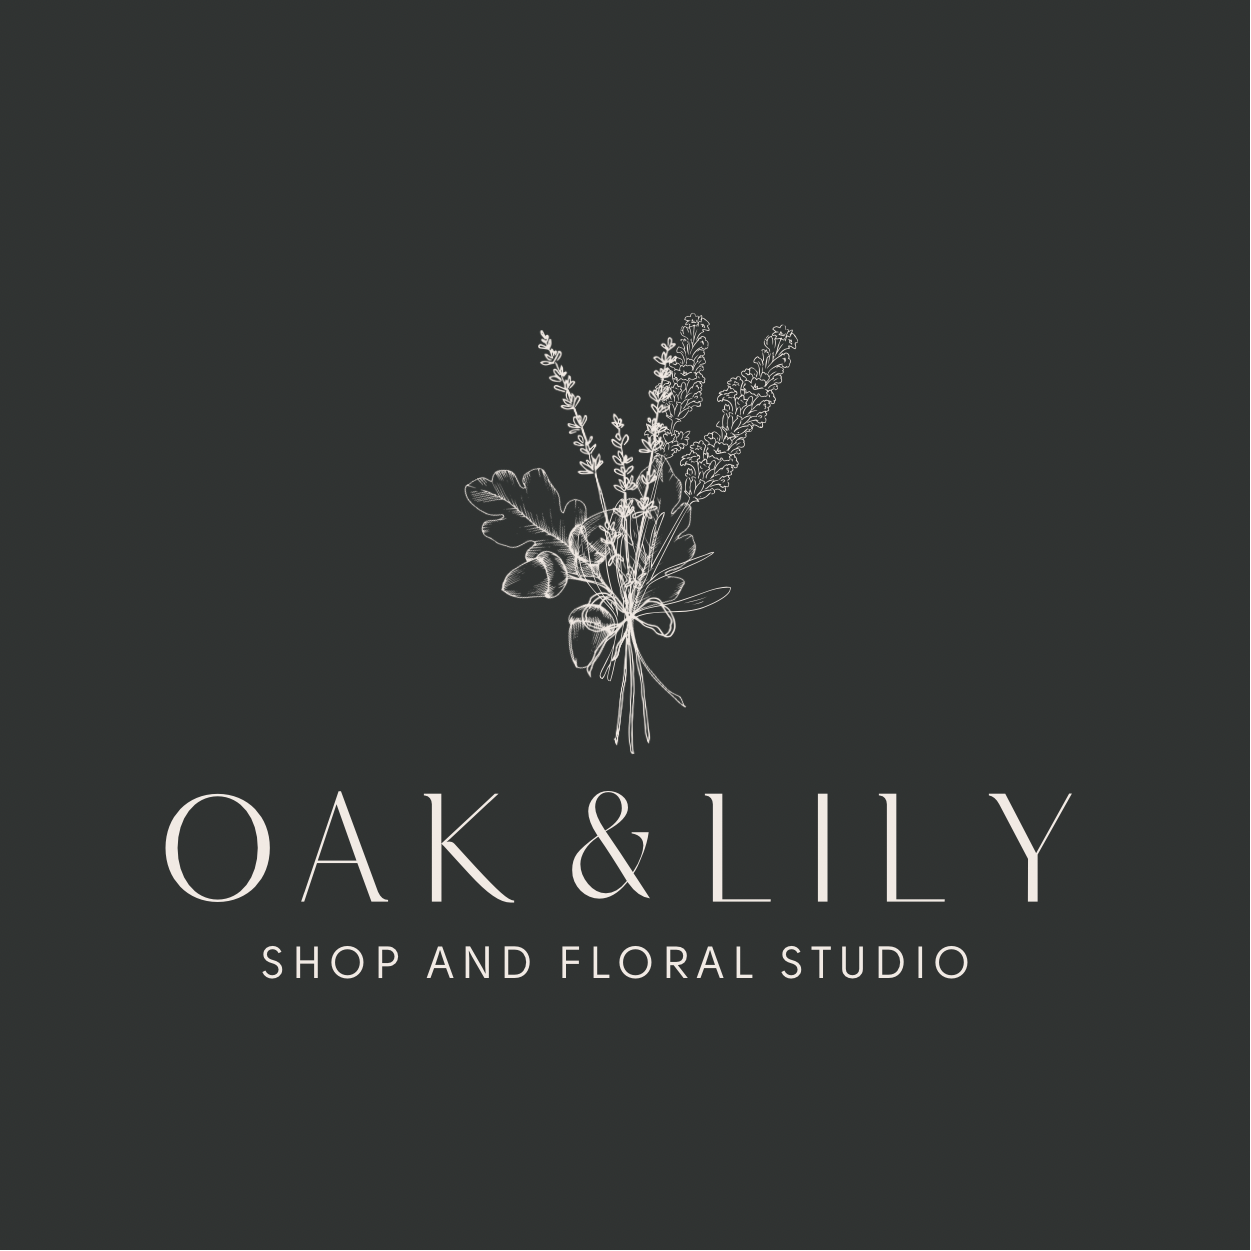 Oak & Lily Shop and Floral Studio